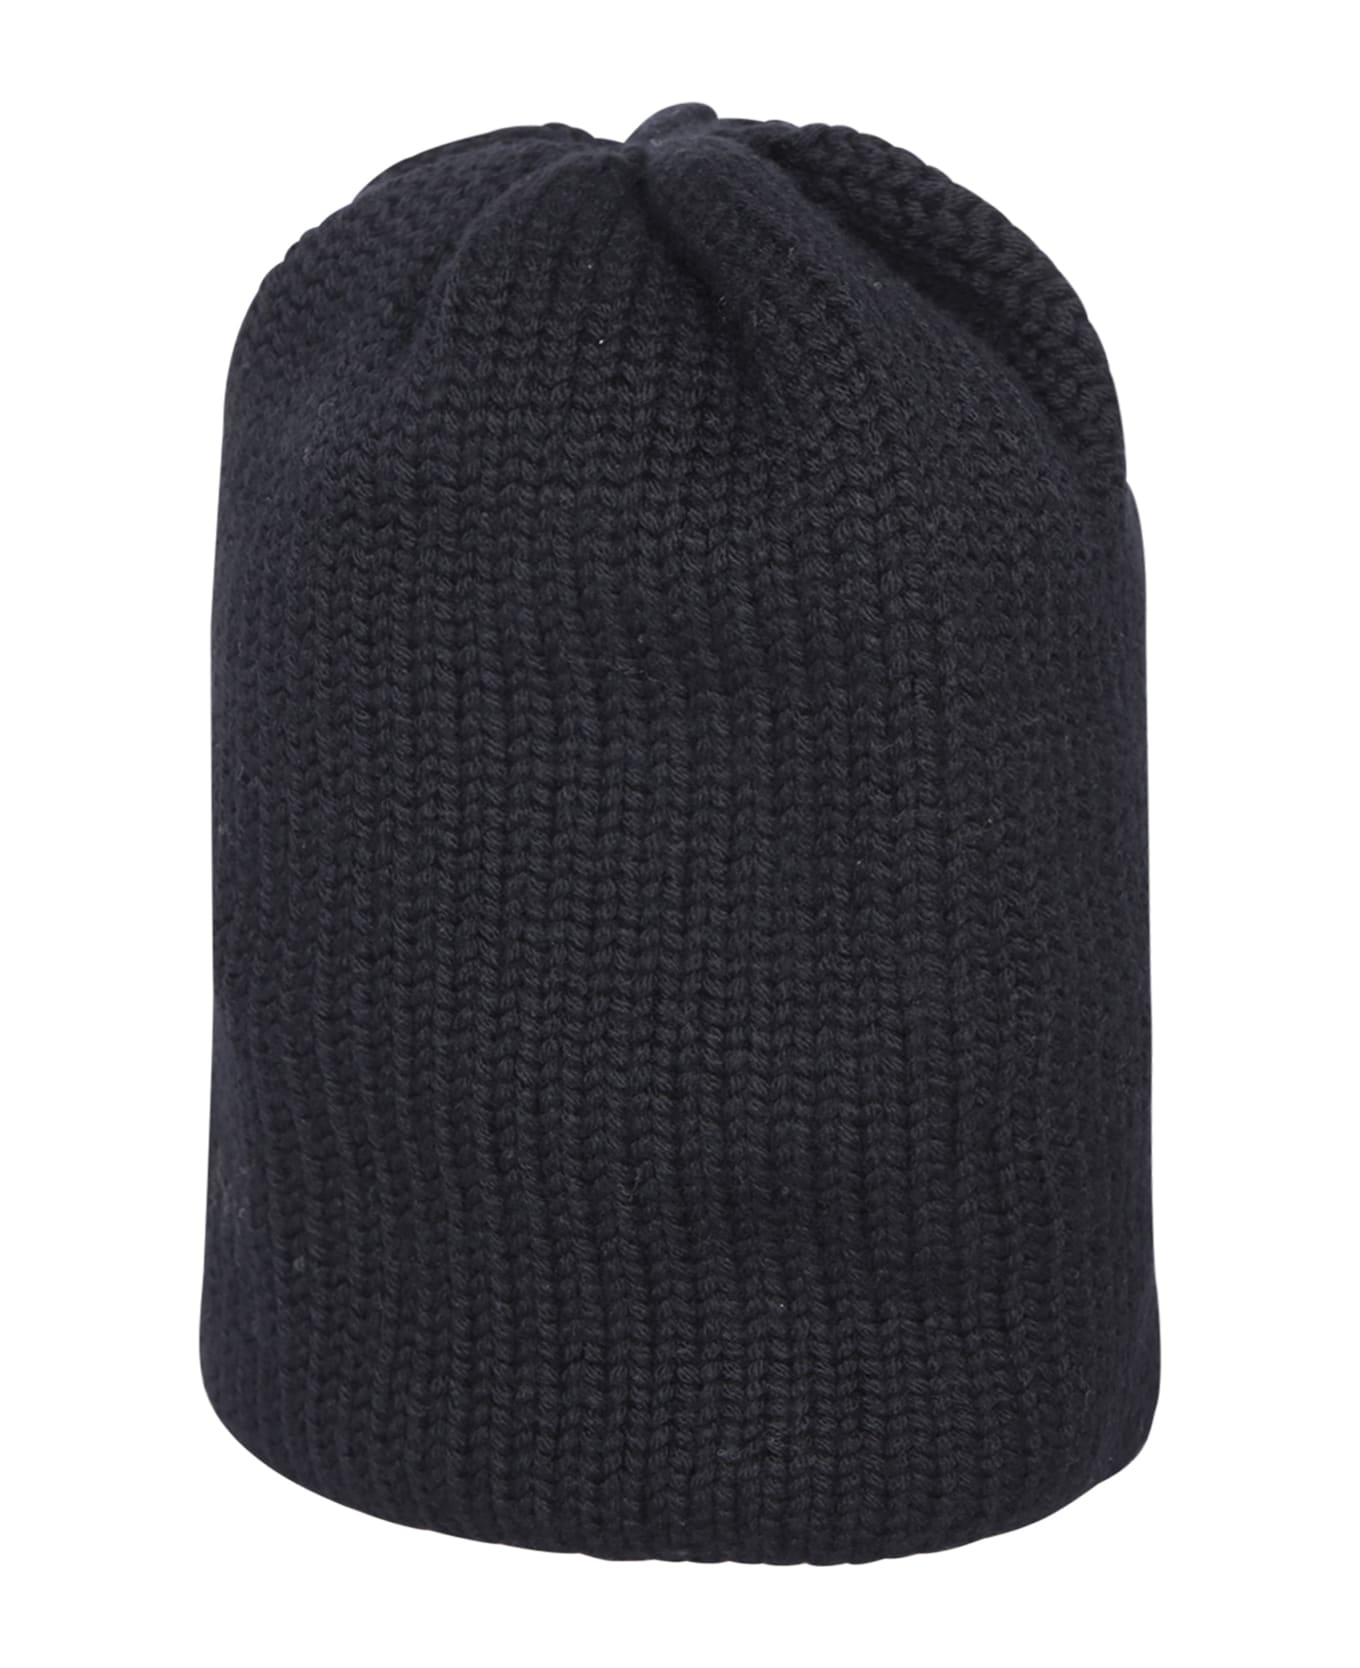 Moncler Grenoble Logo Beanie - Black 帽子